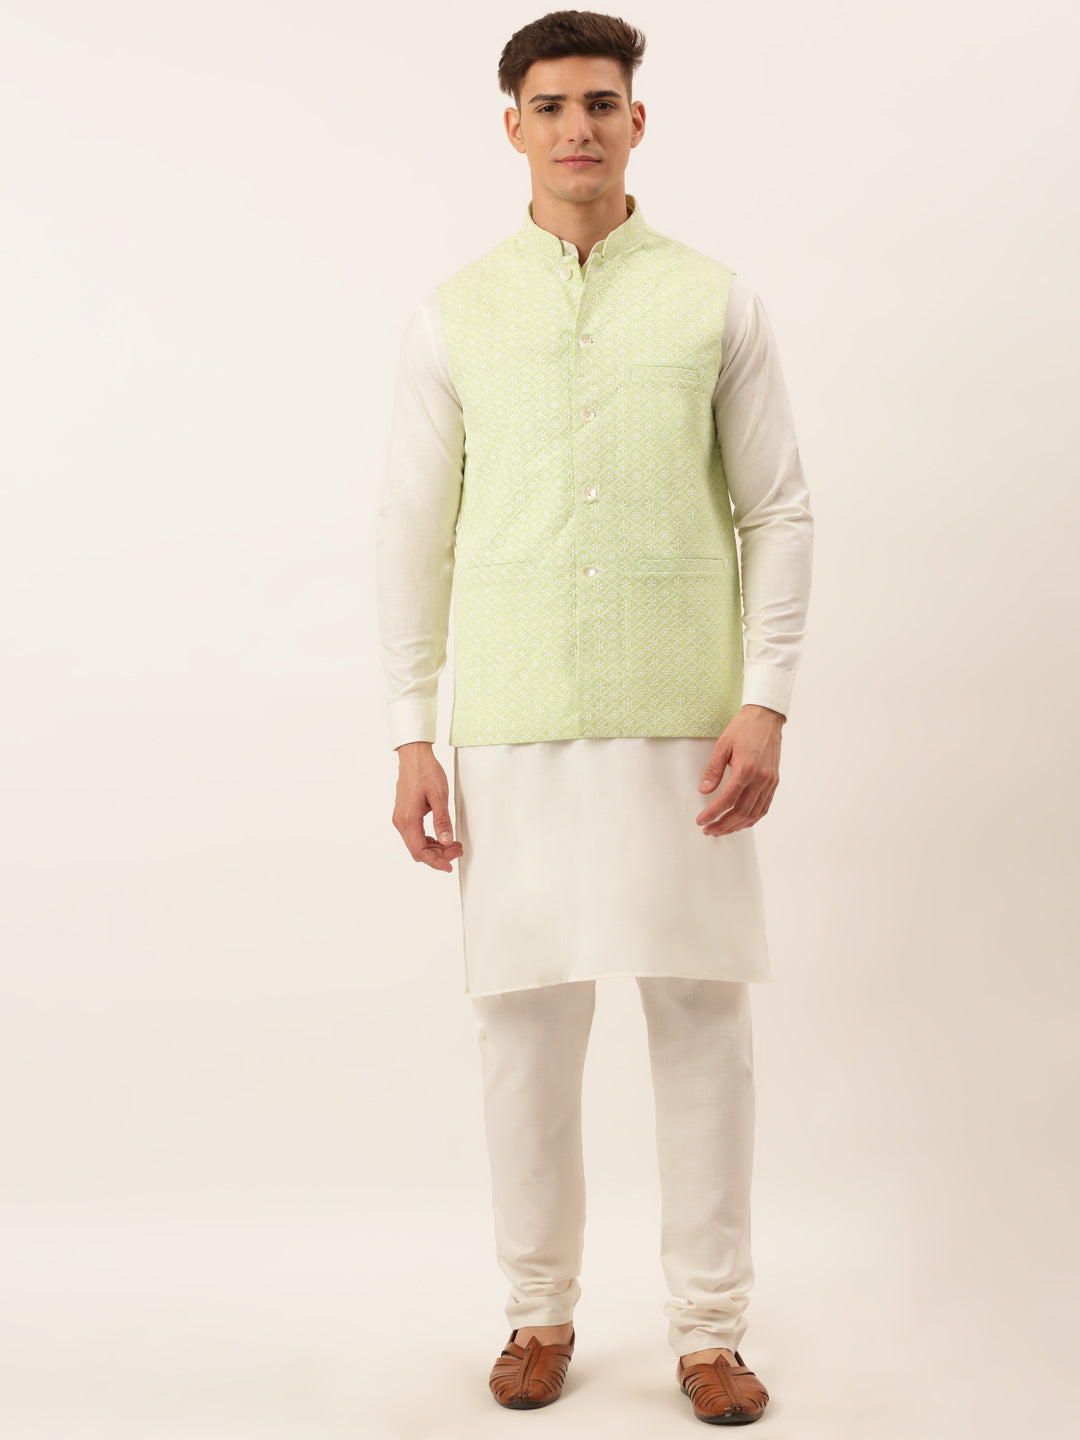 Men White Cotton Blend Kurta with Pyjamas & Green Embroidered Nehru Jacket